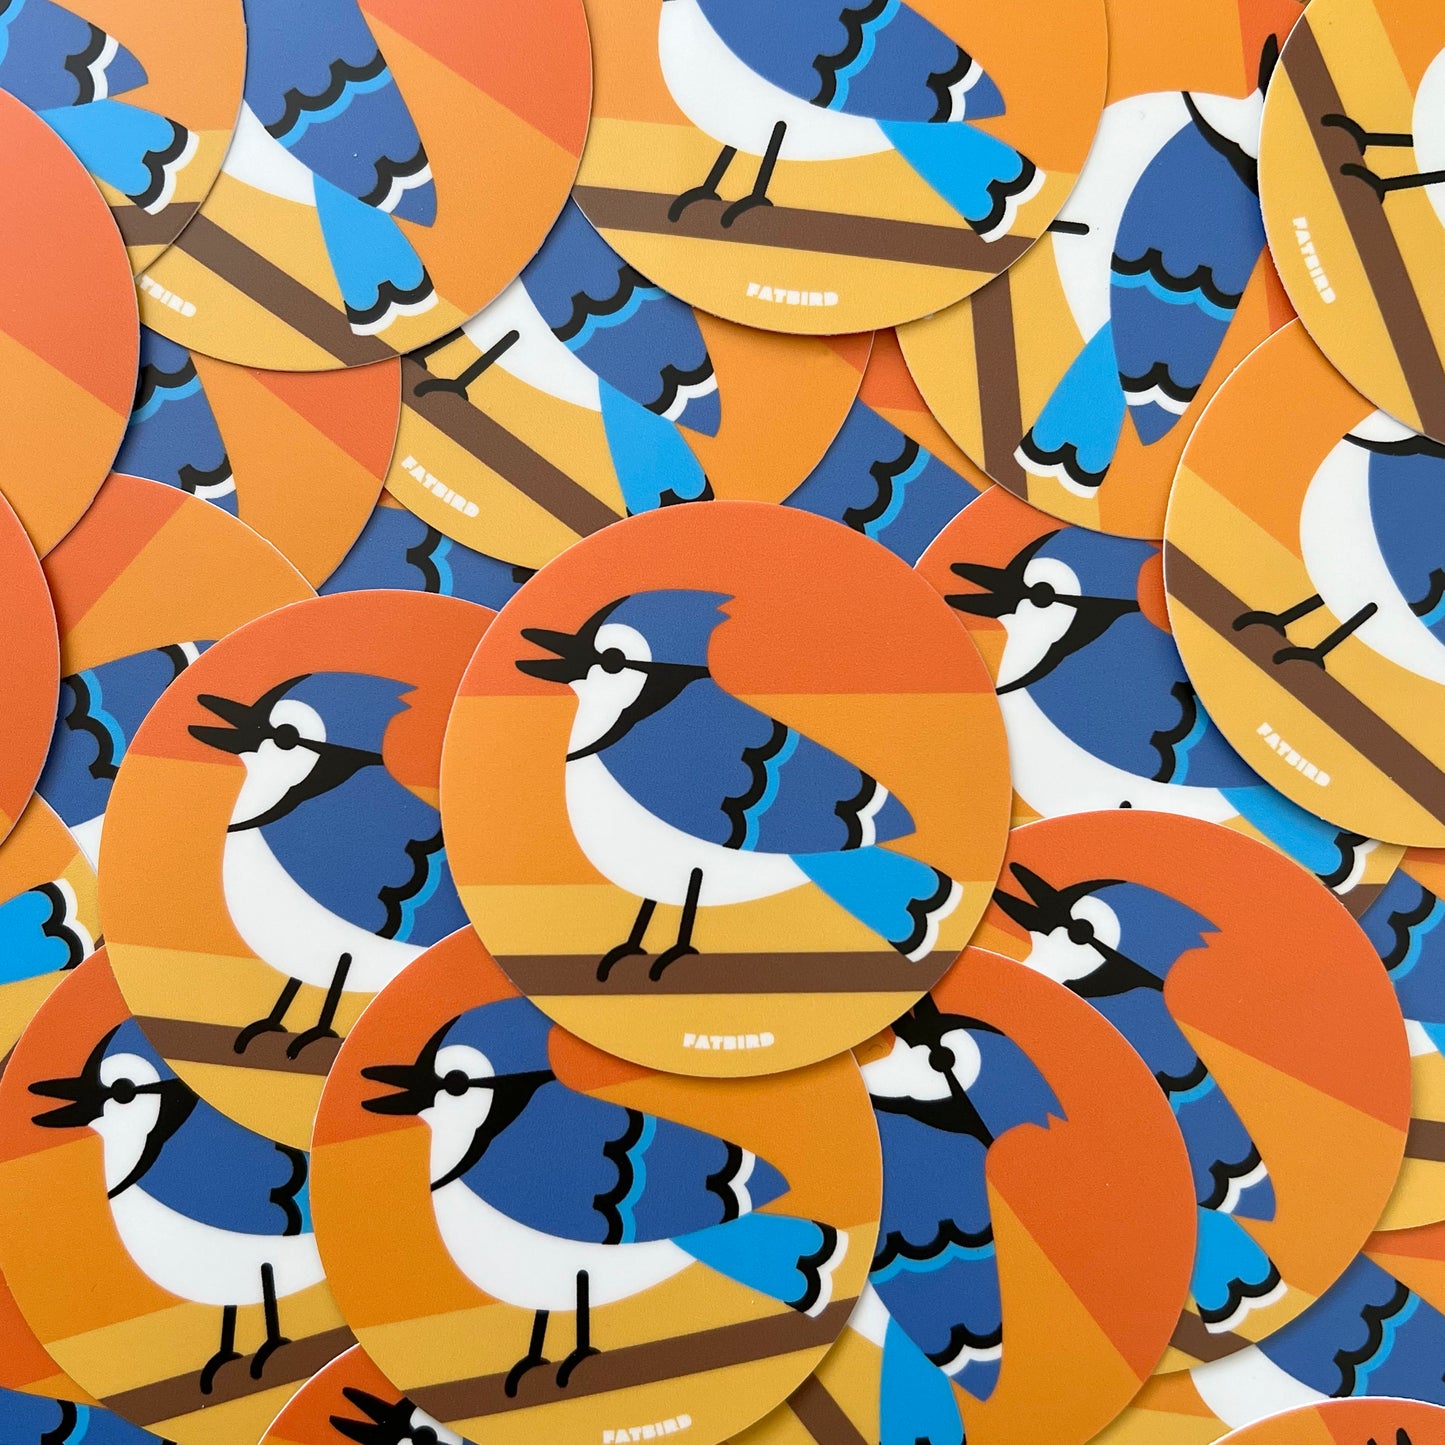 Blue Jay (singing) 2.5 inch vinyl sticker